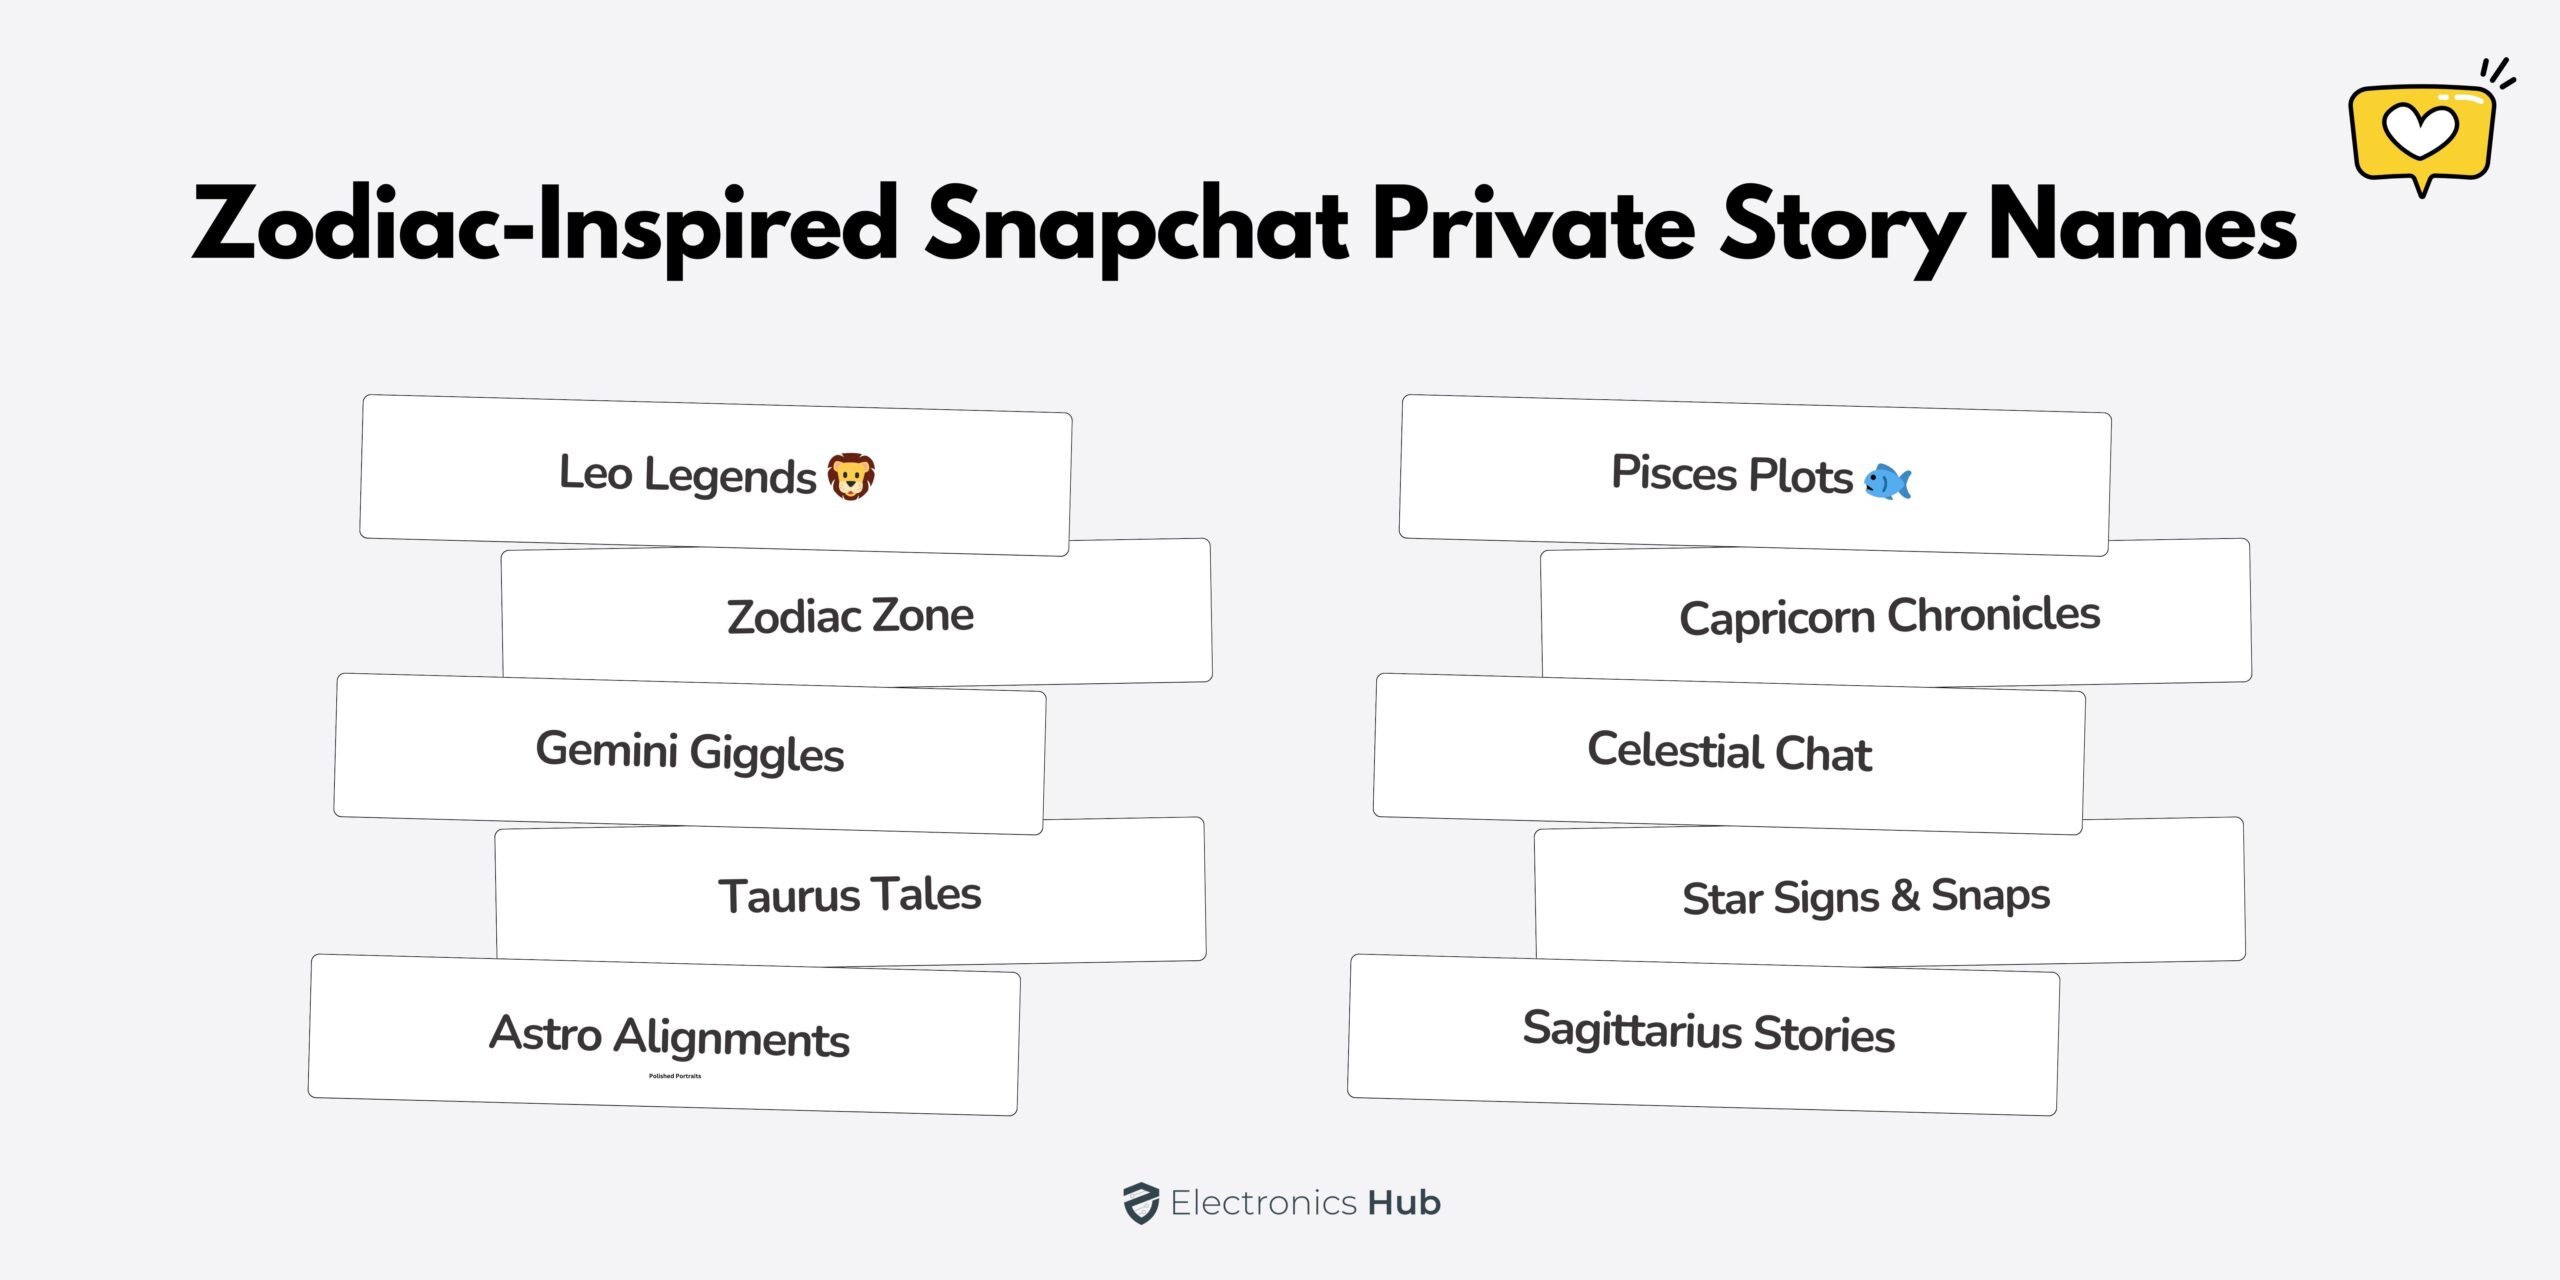 Zodiac-Inspired Snapchat Private Story Names